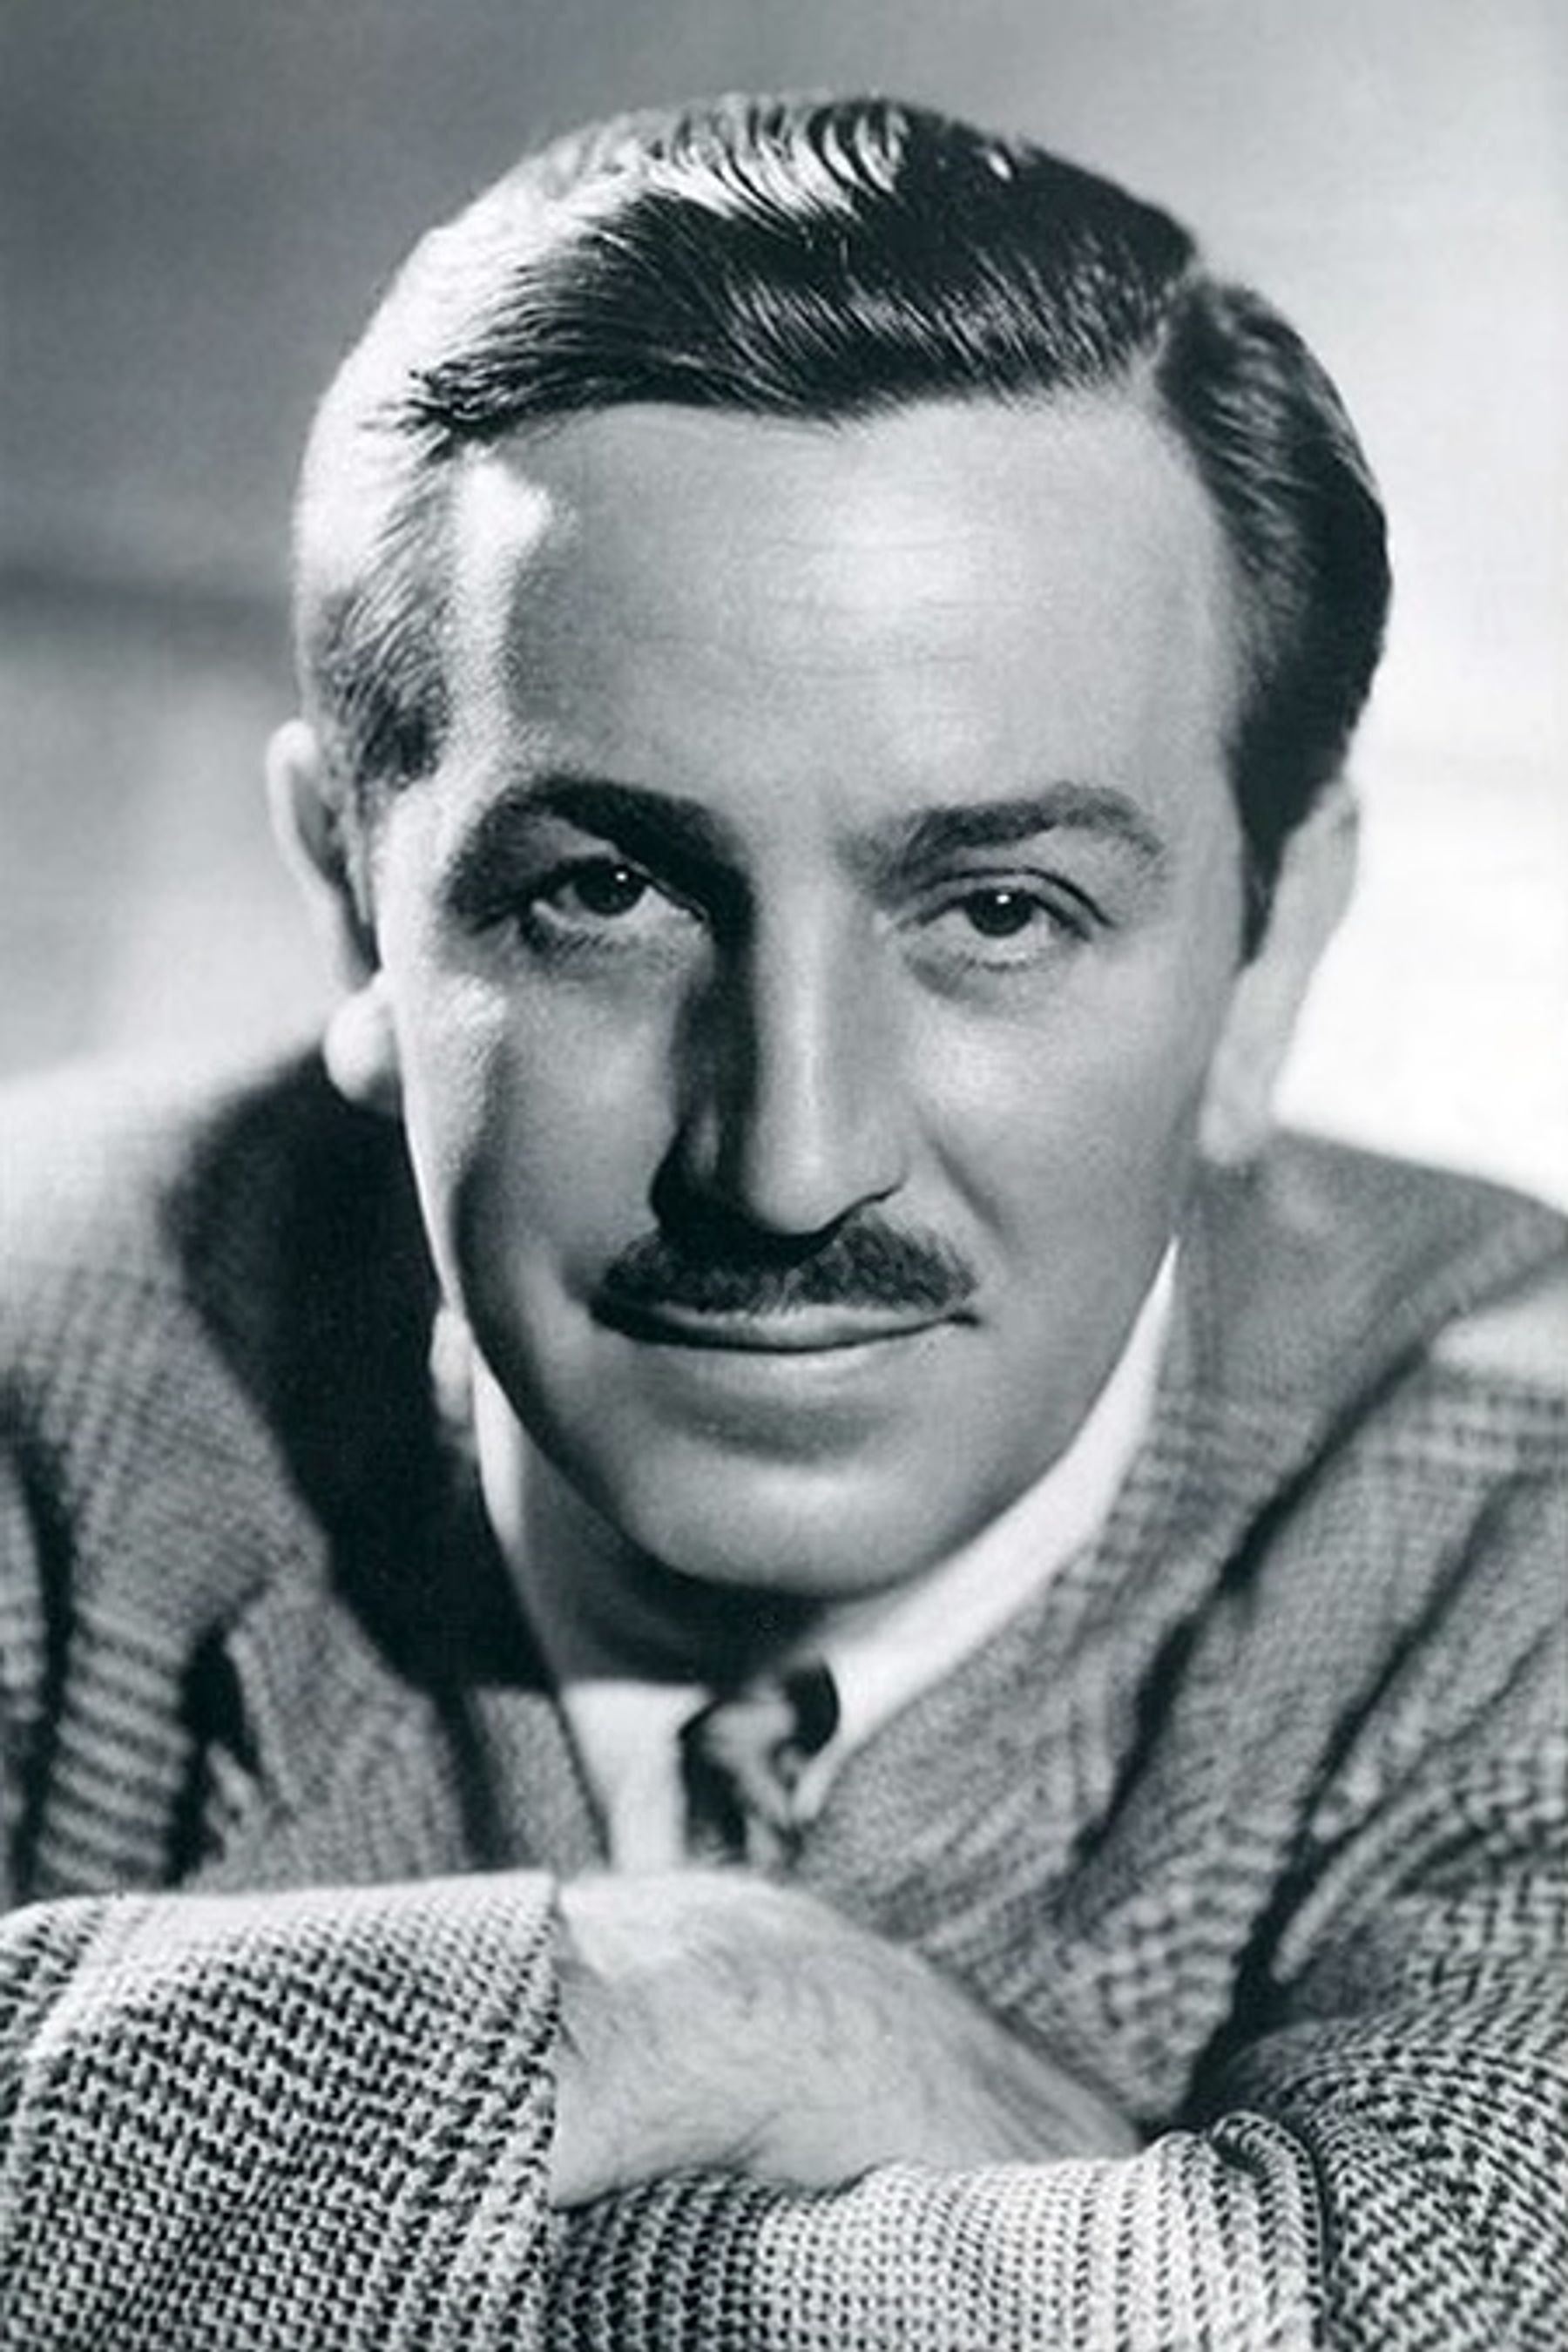 A black-and-white headshot of Walt Disney